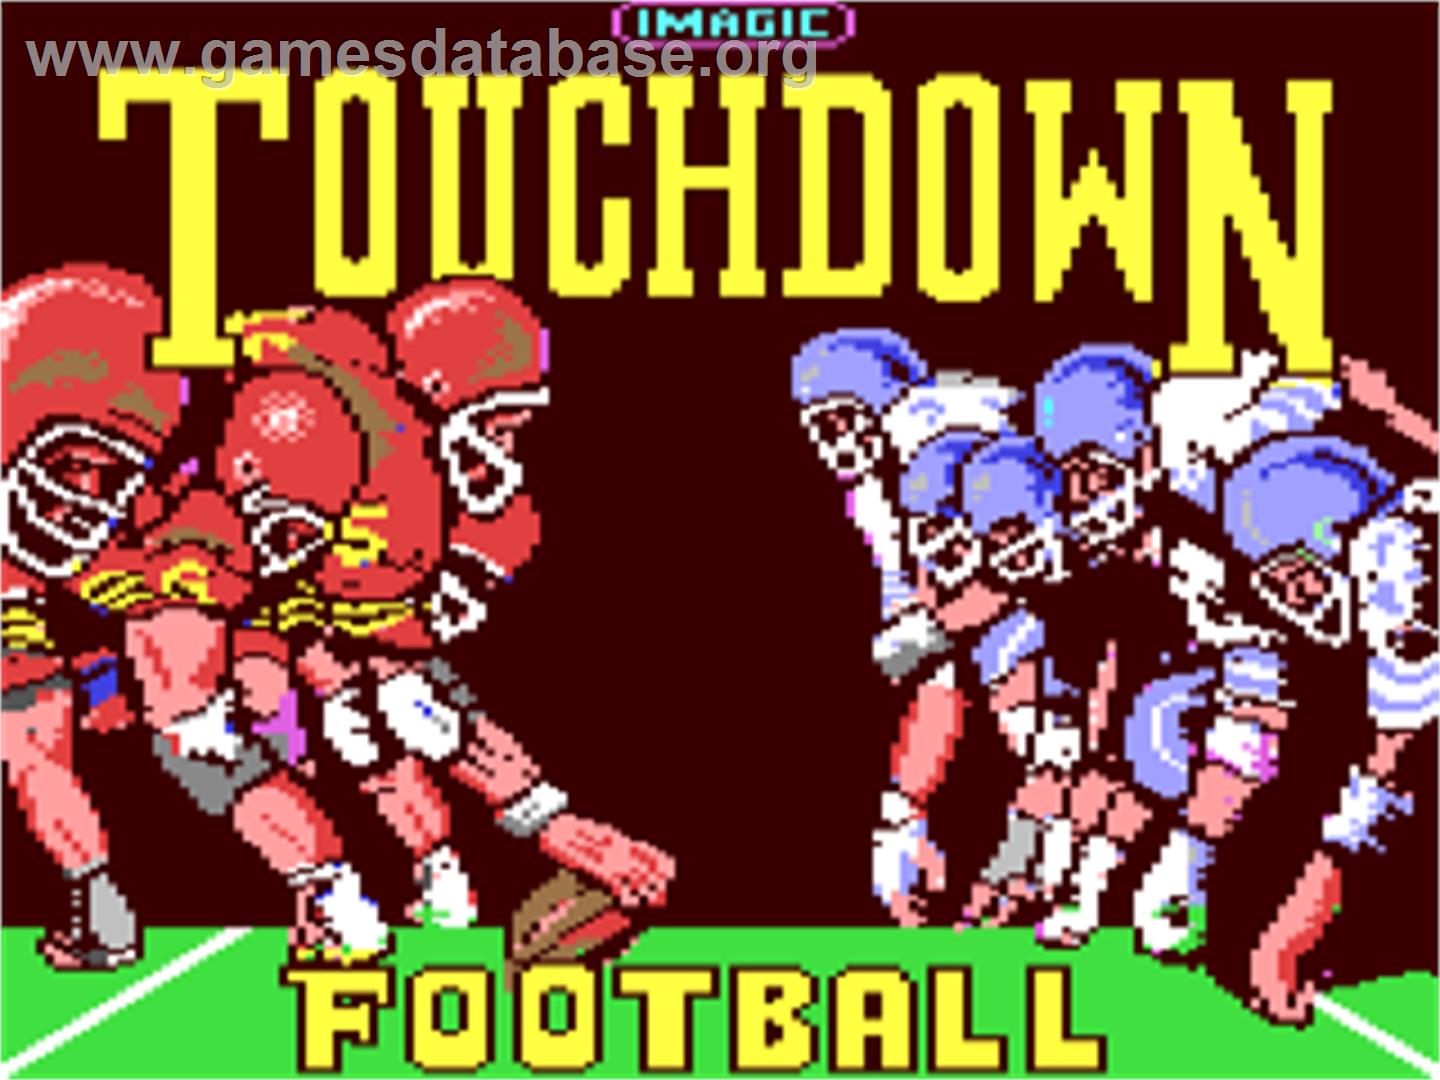 Touchdown Football - Commodore 64 - Artwork - Title Screen